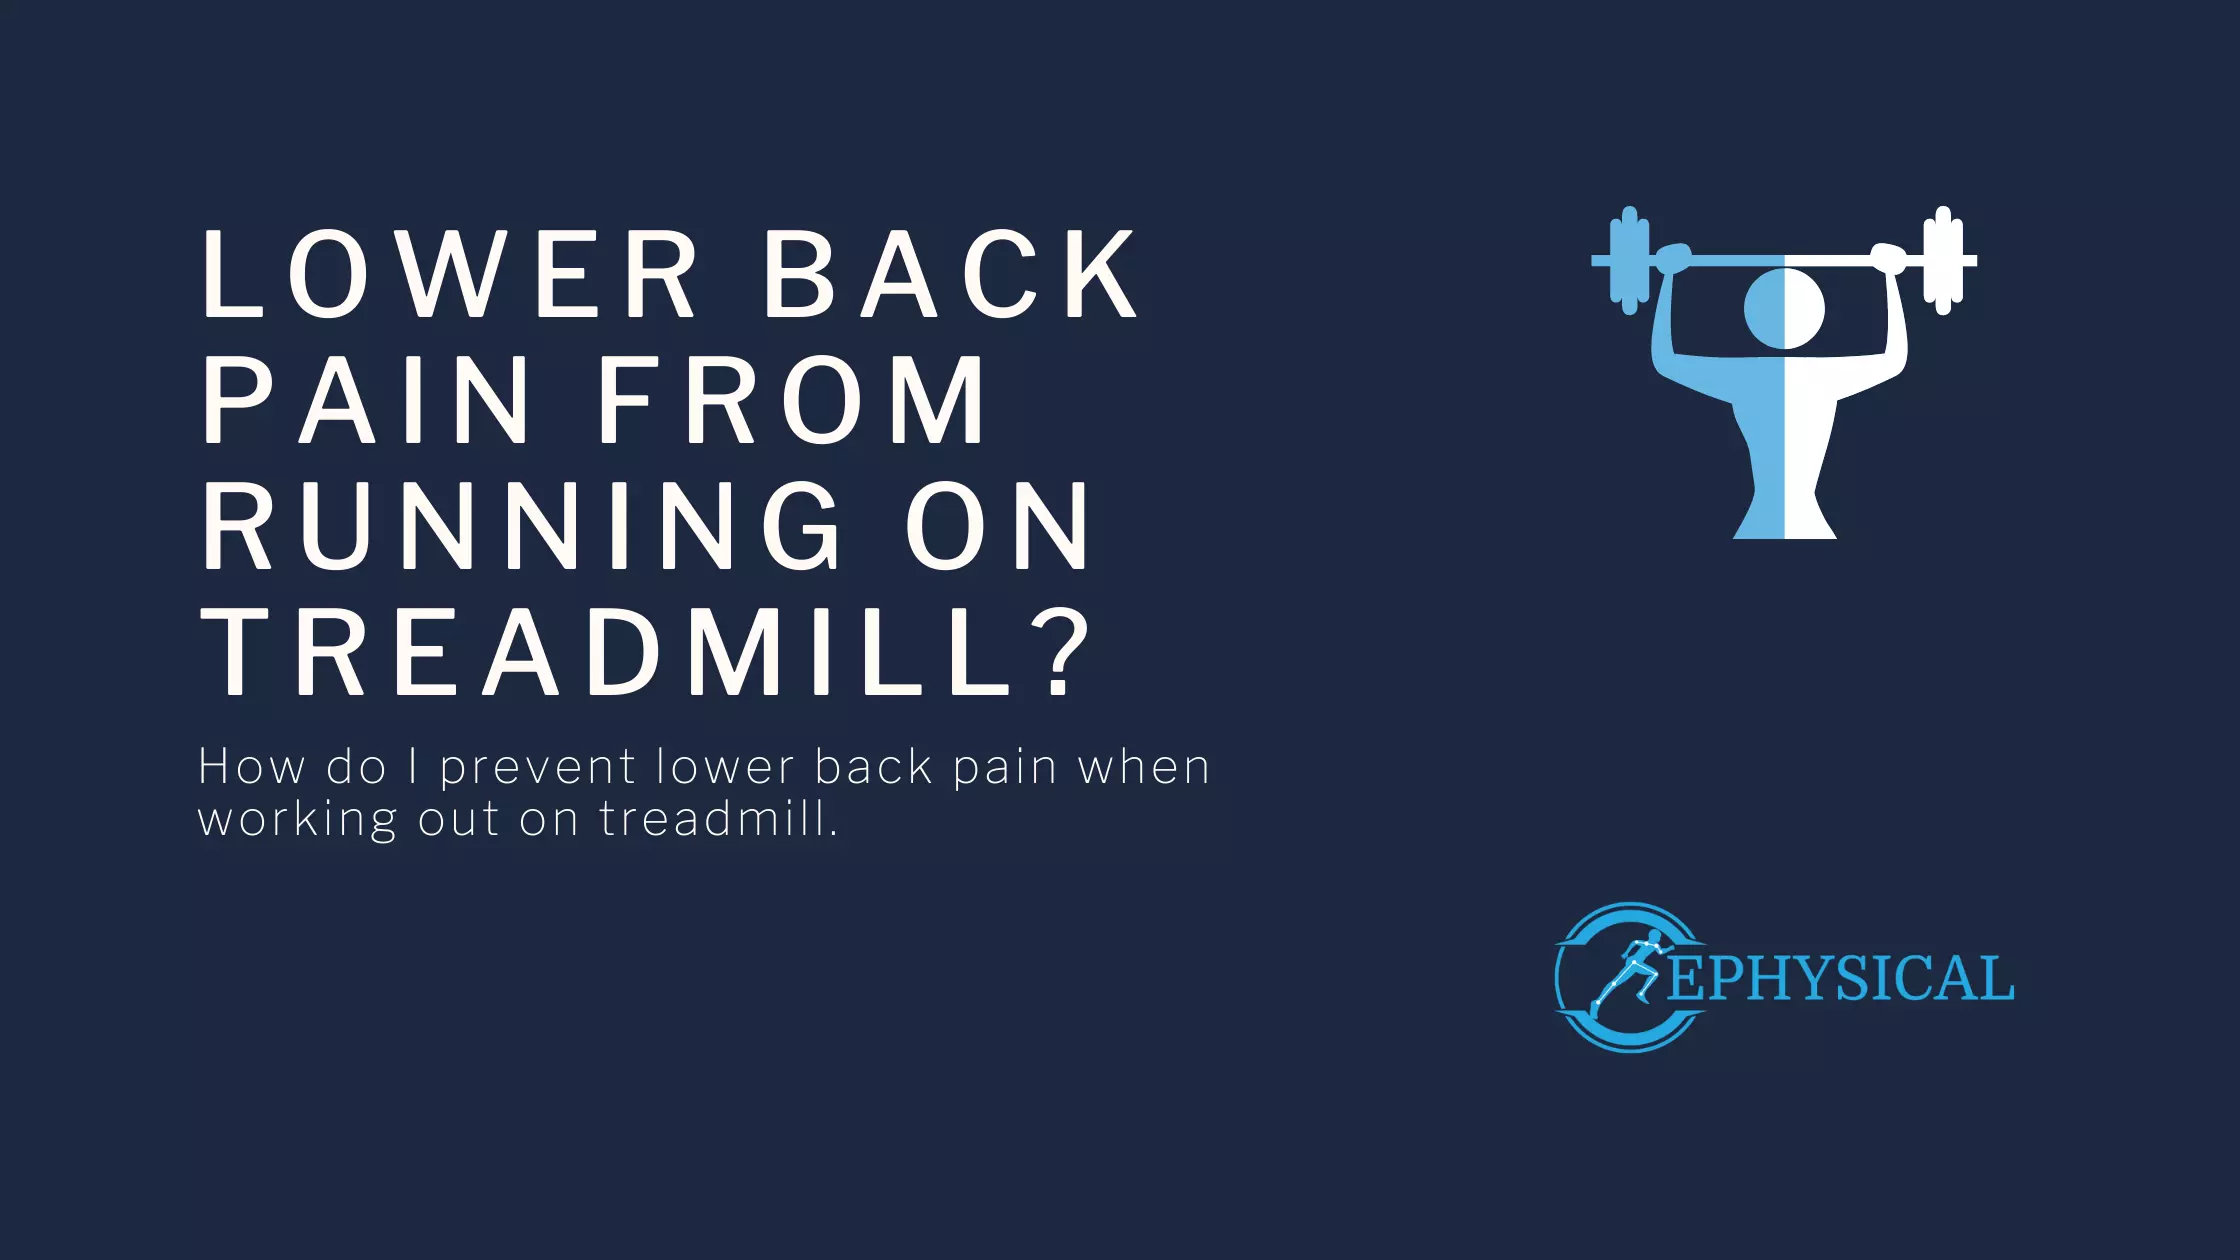 Back pain from running on treadmill